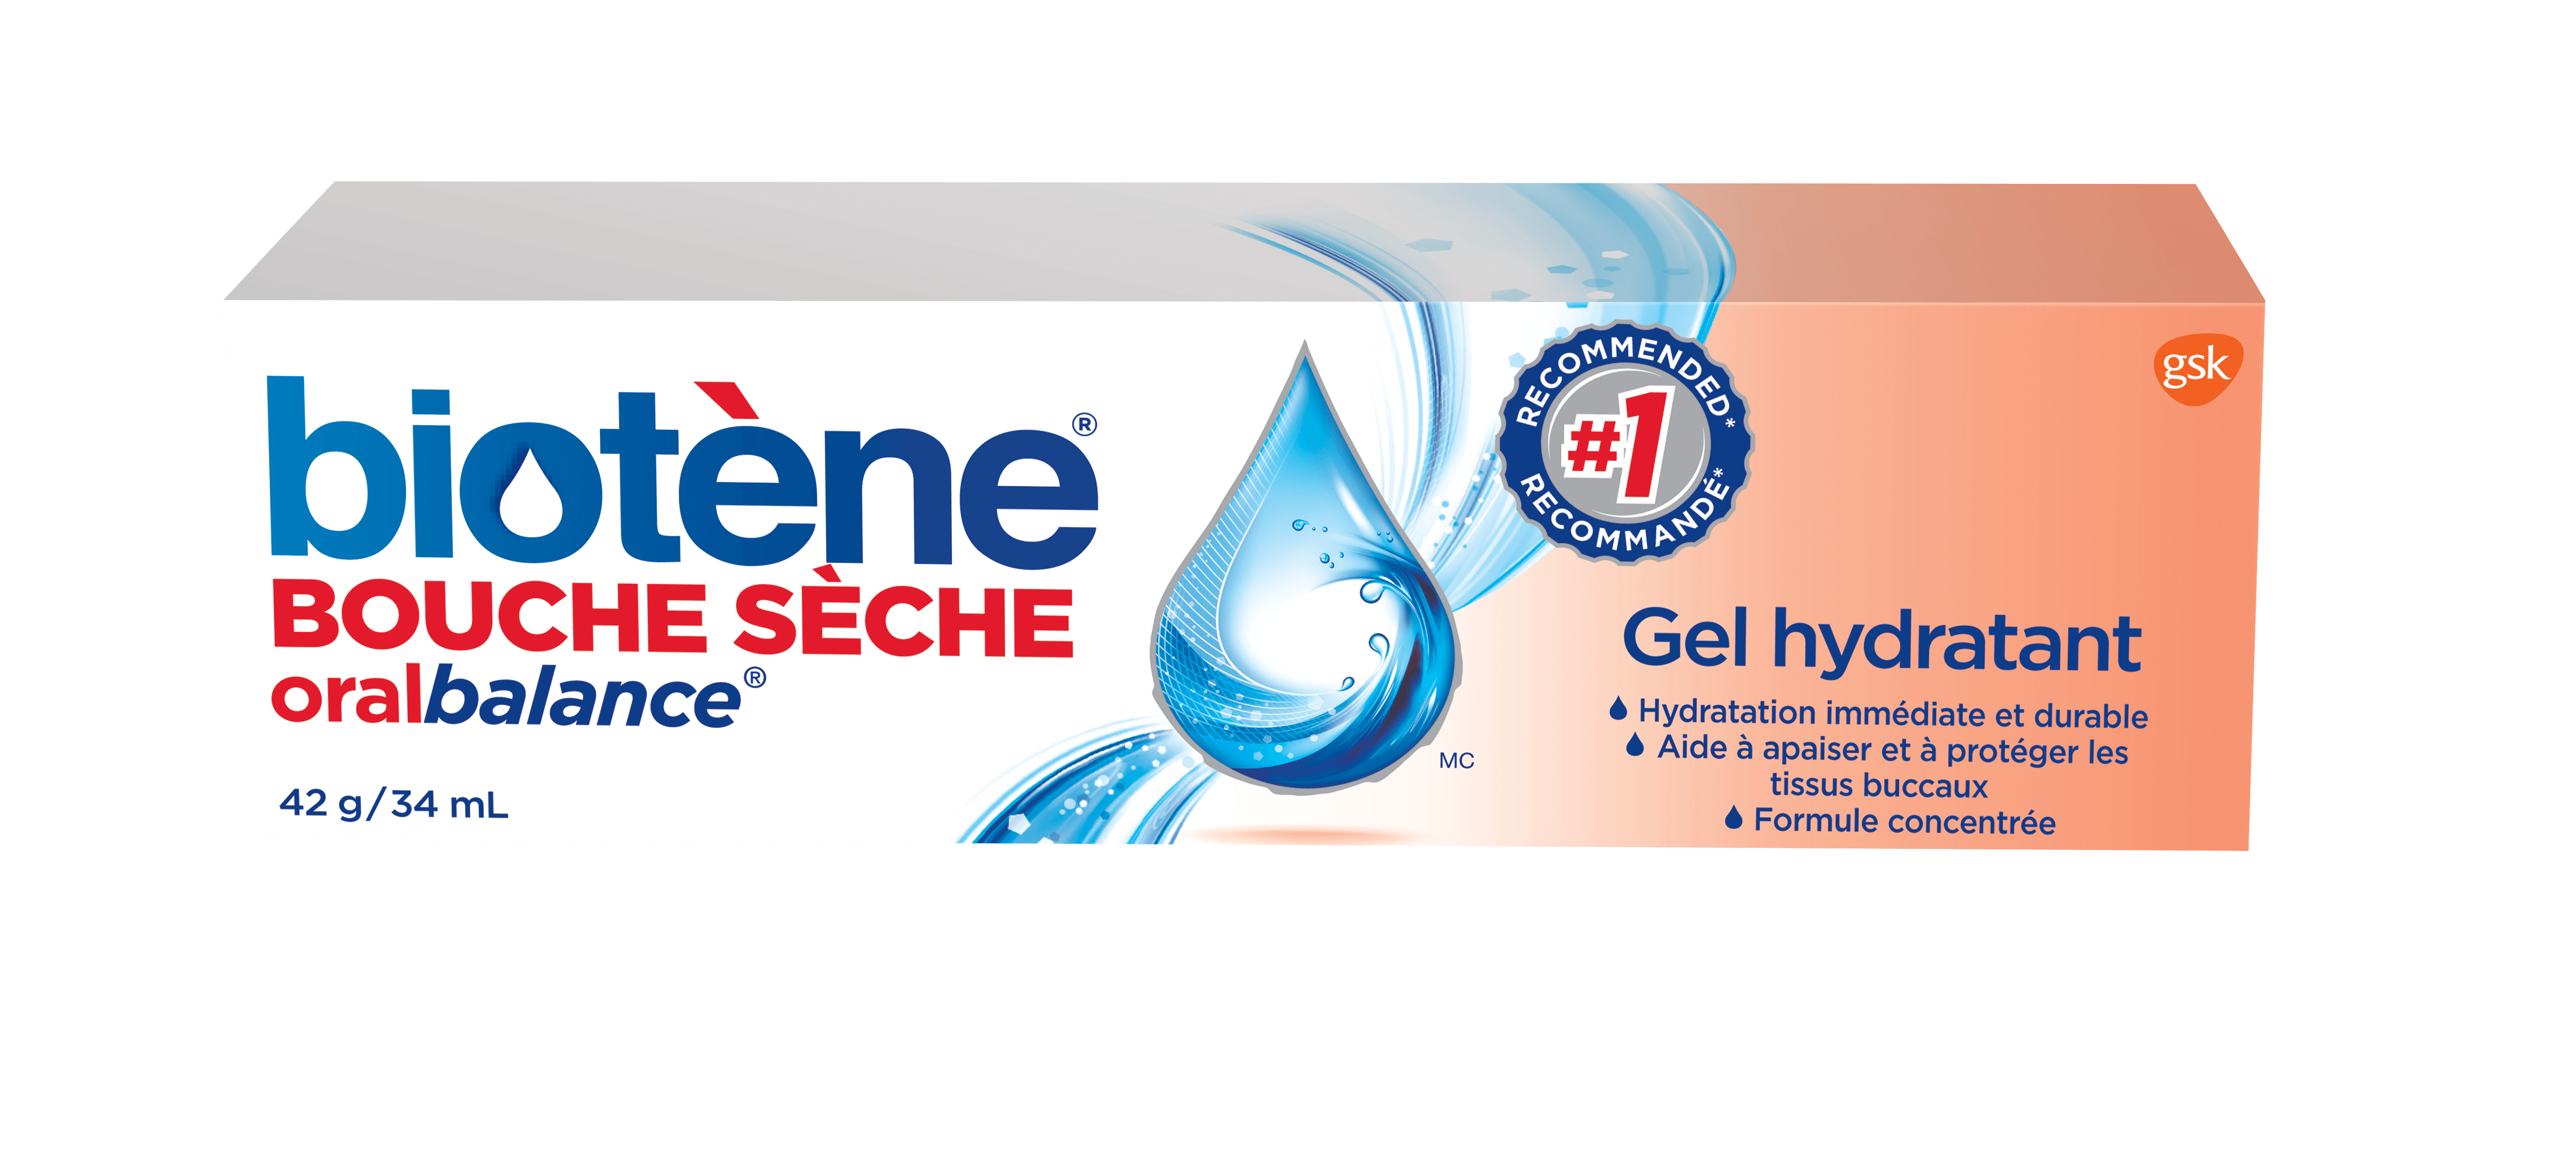 Boîte de gel hydratant Biotène OralBalance pour la bouche sèche